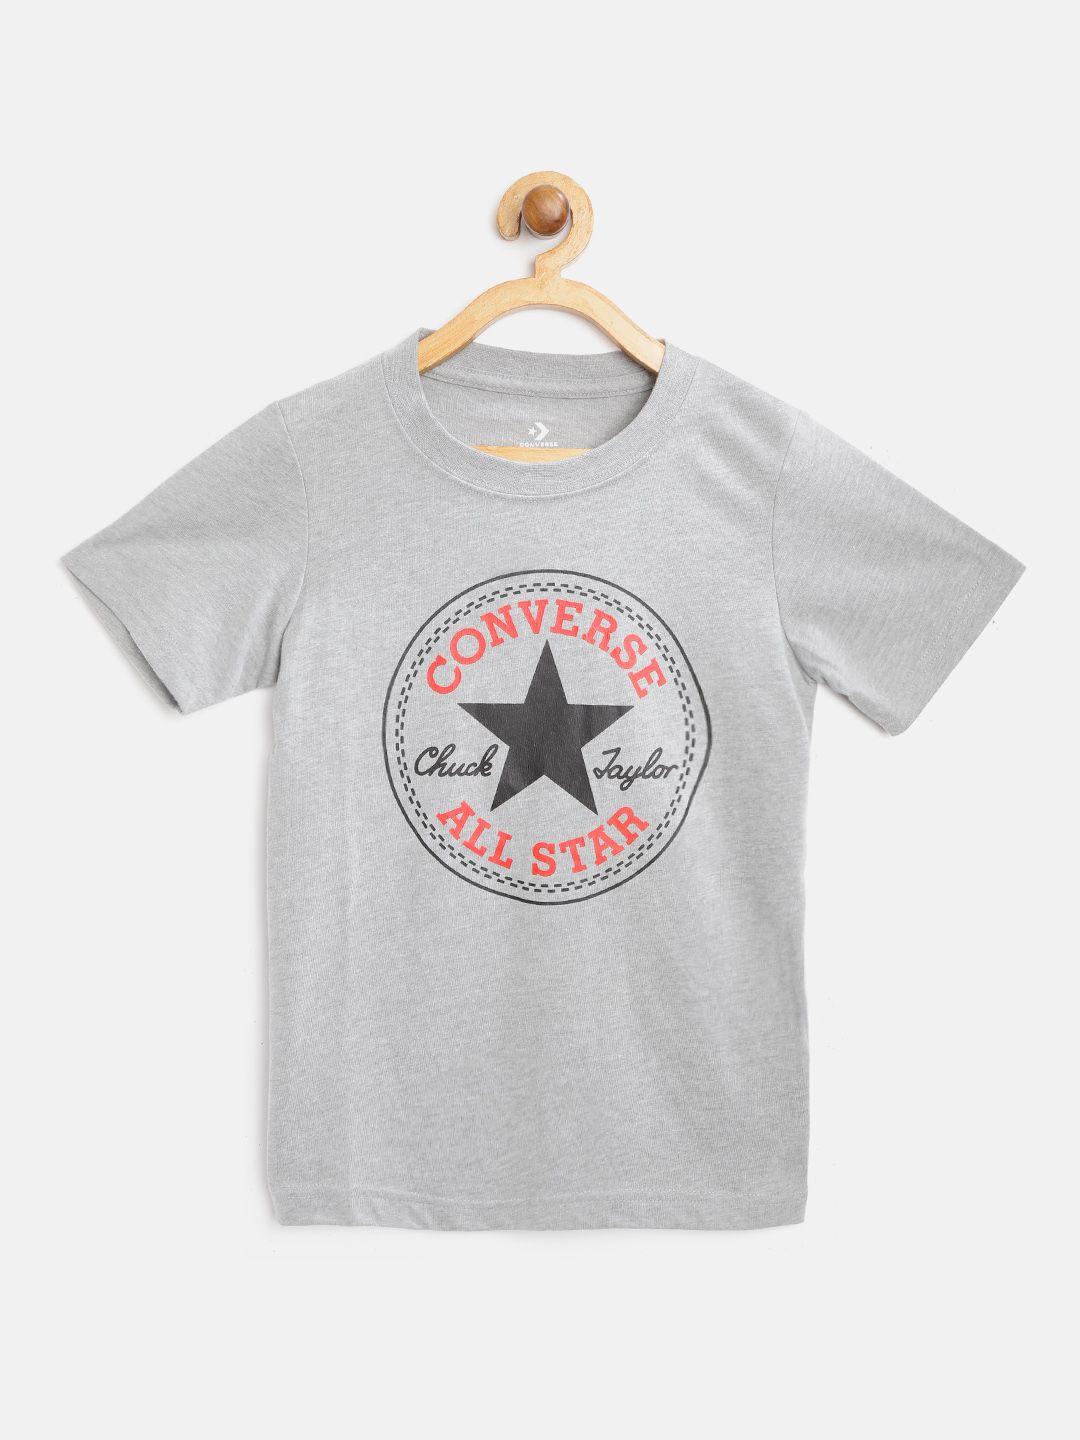 converse-boys-grey-melange-&-black-brand-logo-print-pure-cotton-round-neck-t-shirt